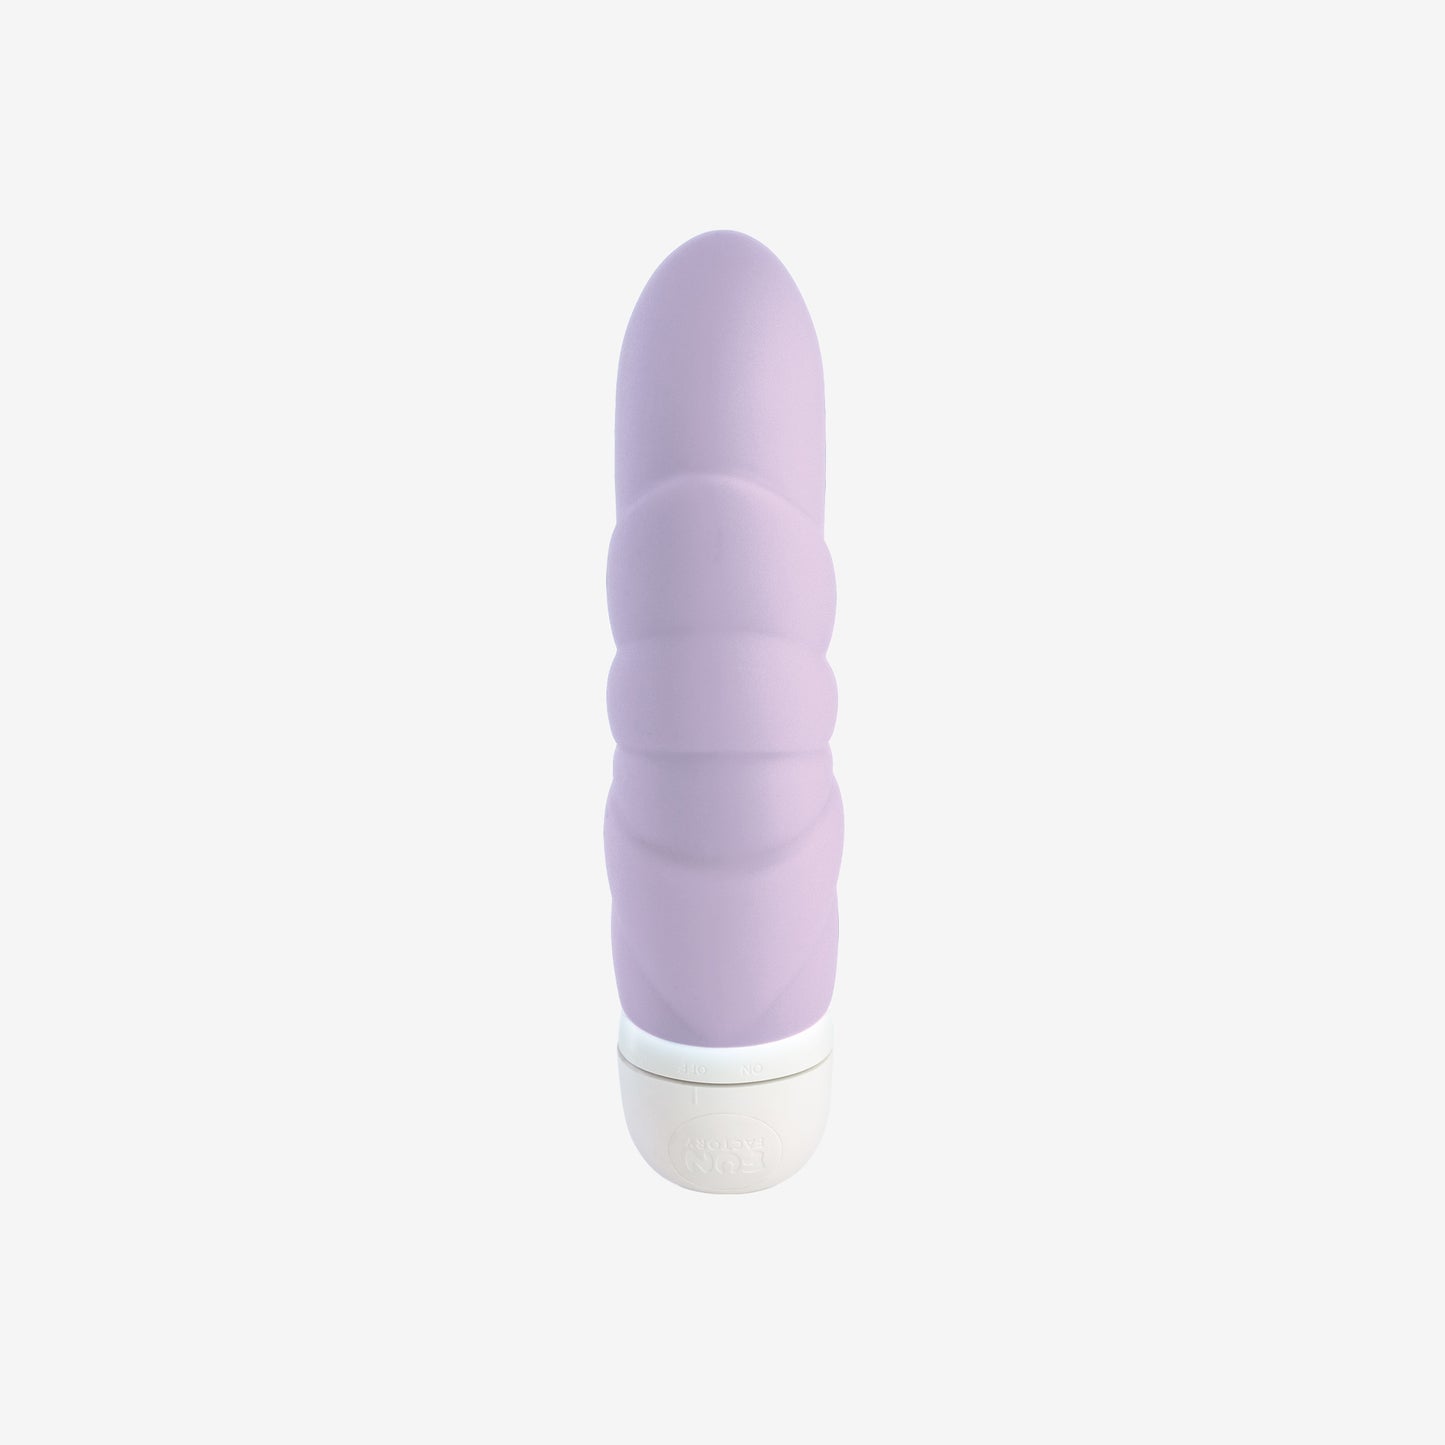 Jam mini vibrator in purple front facing